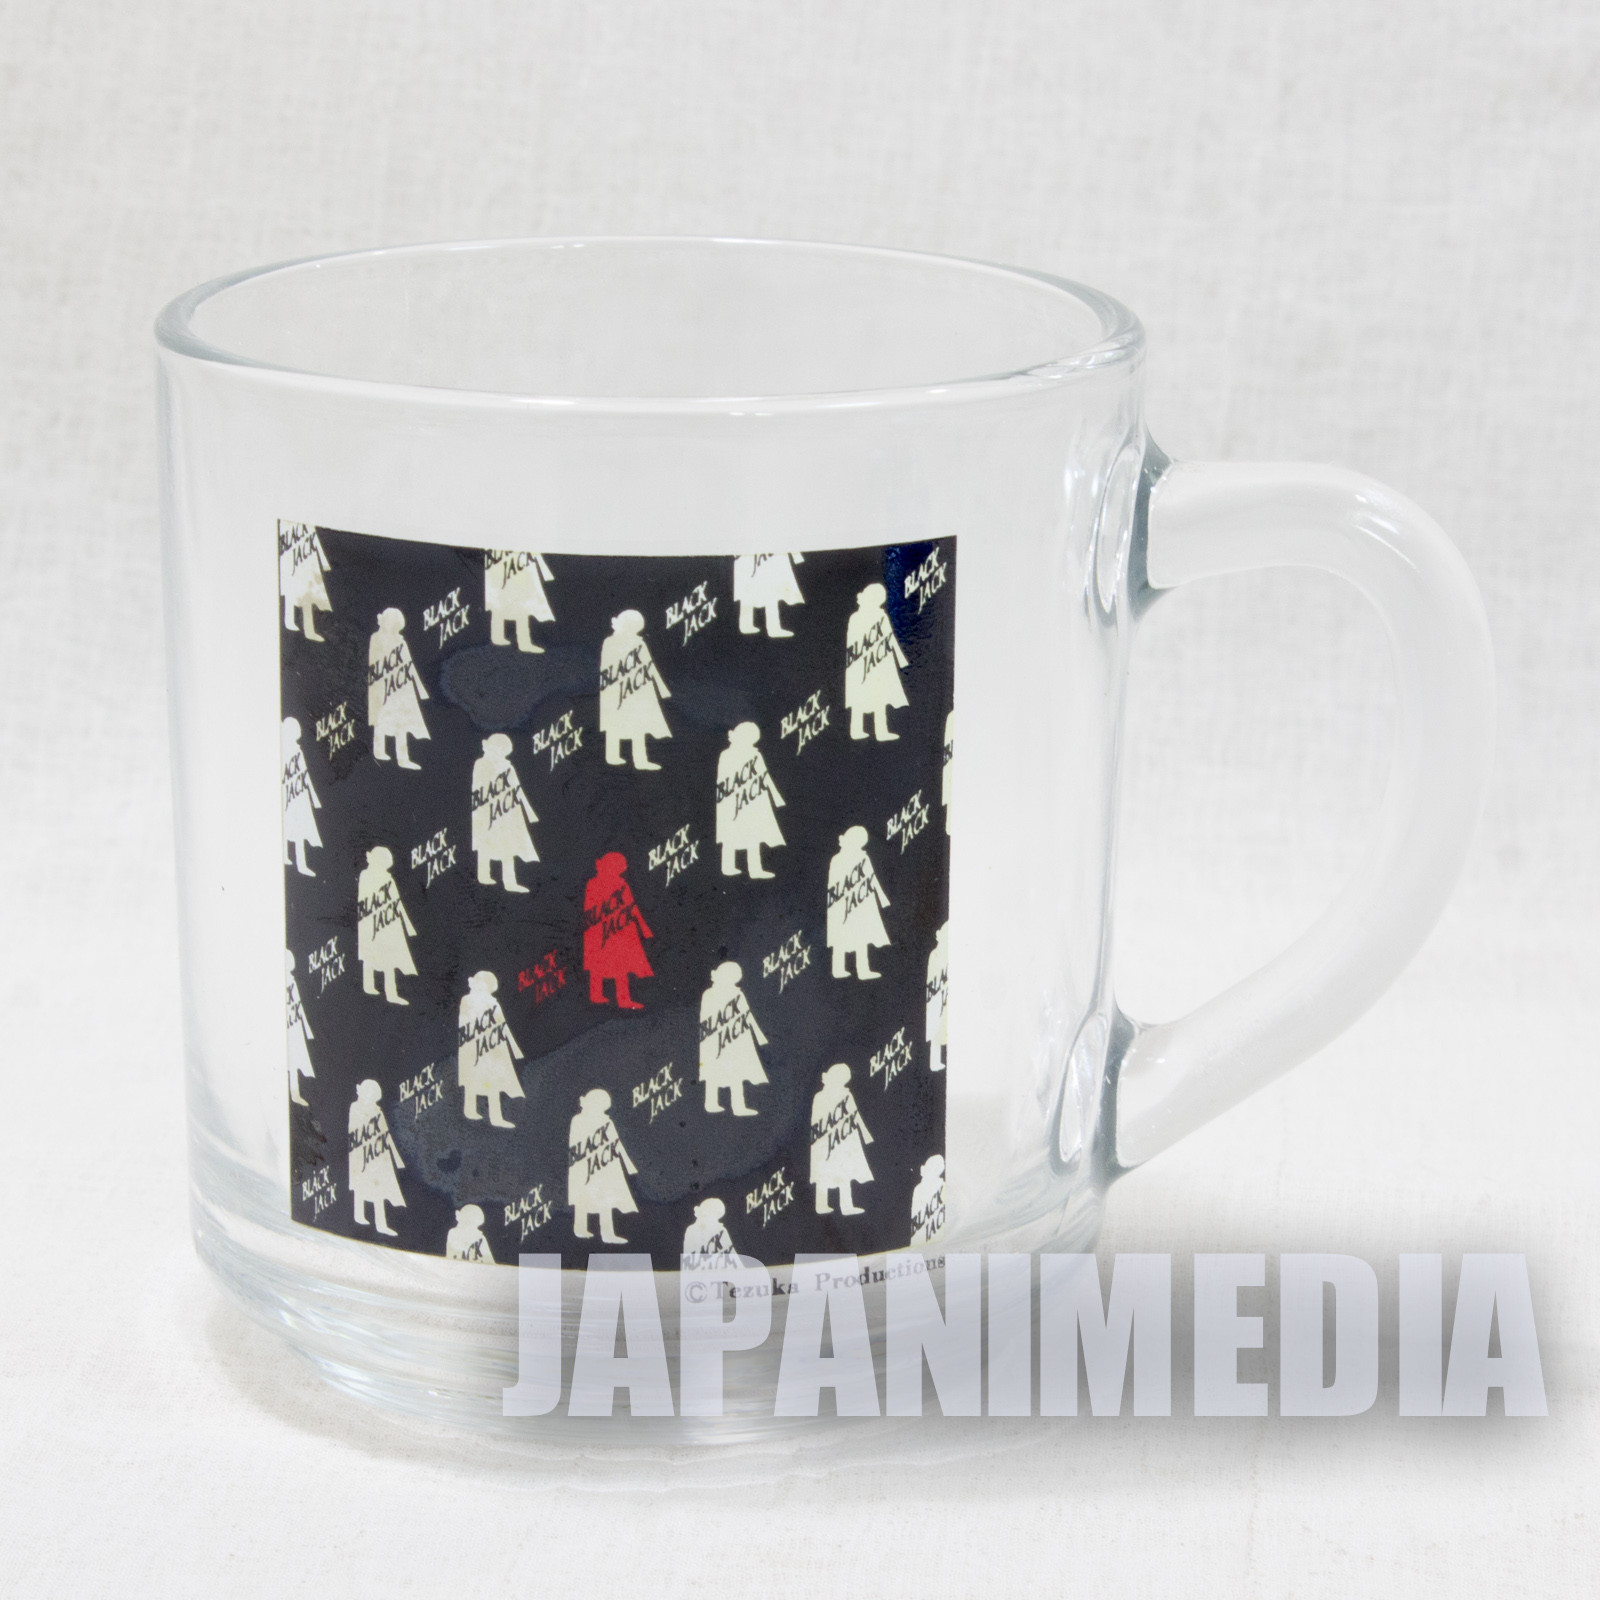 Black Jack Glass Mug #2 Tezuka Osamu JAPAN ANIME